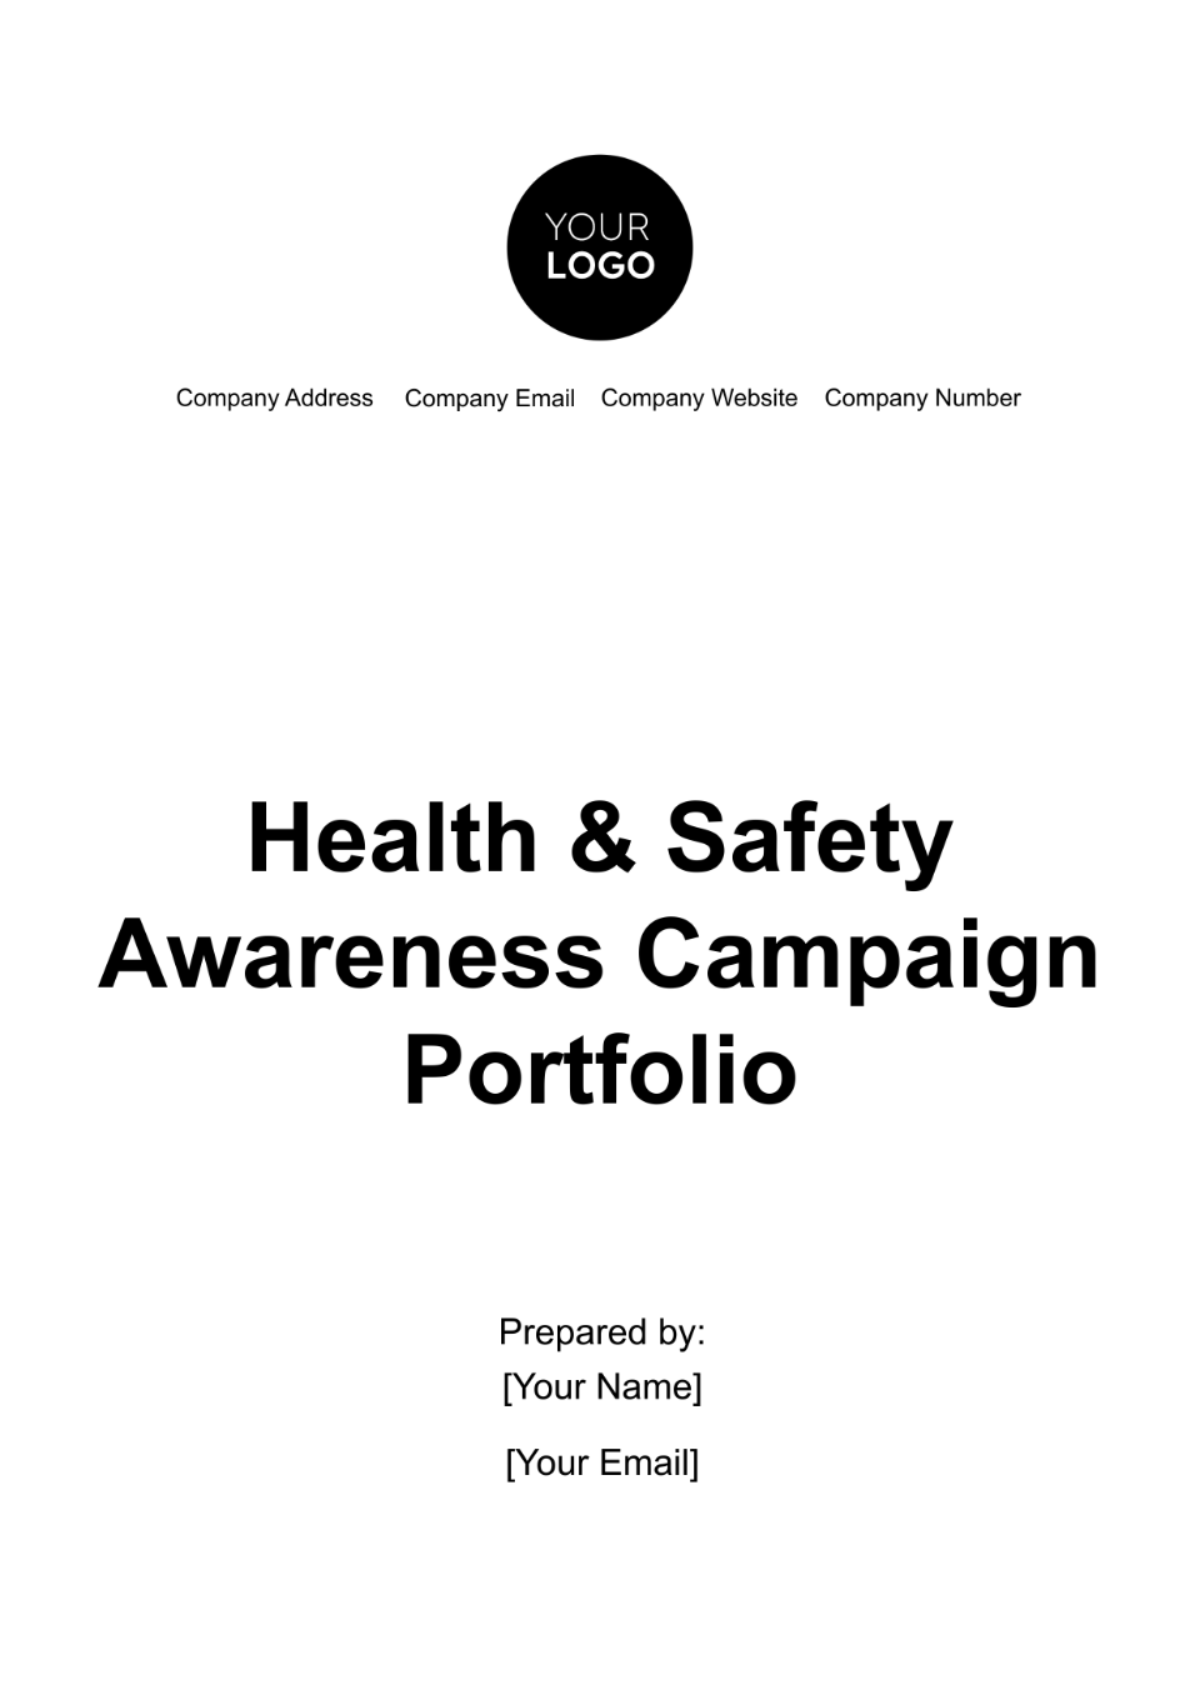 Health & Safety Awareness Campaign Portfolio Template